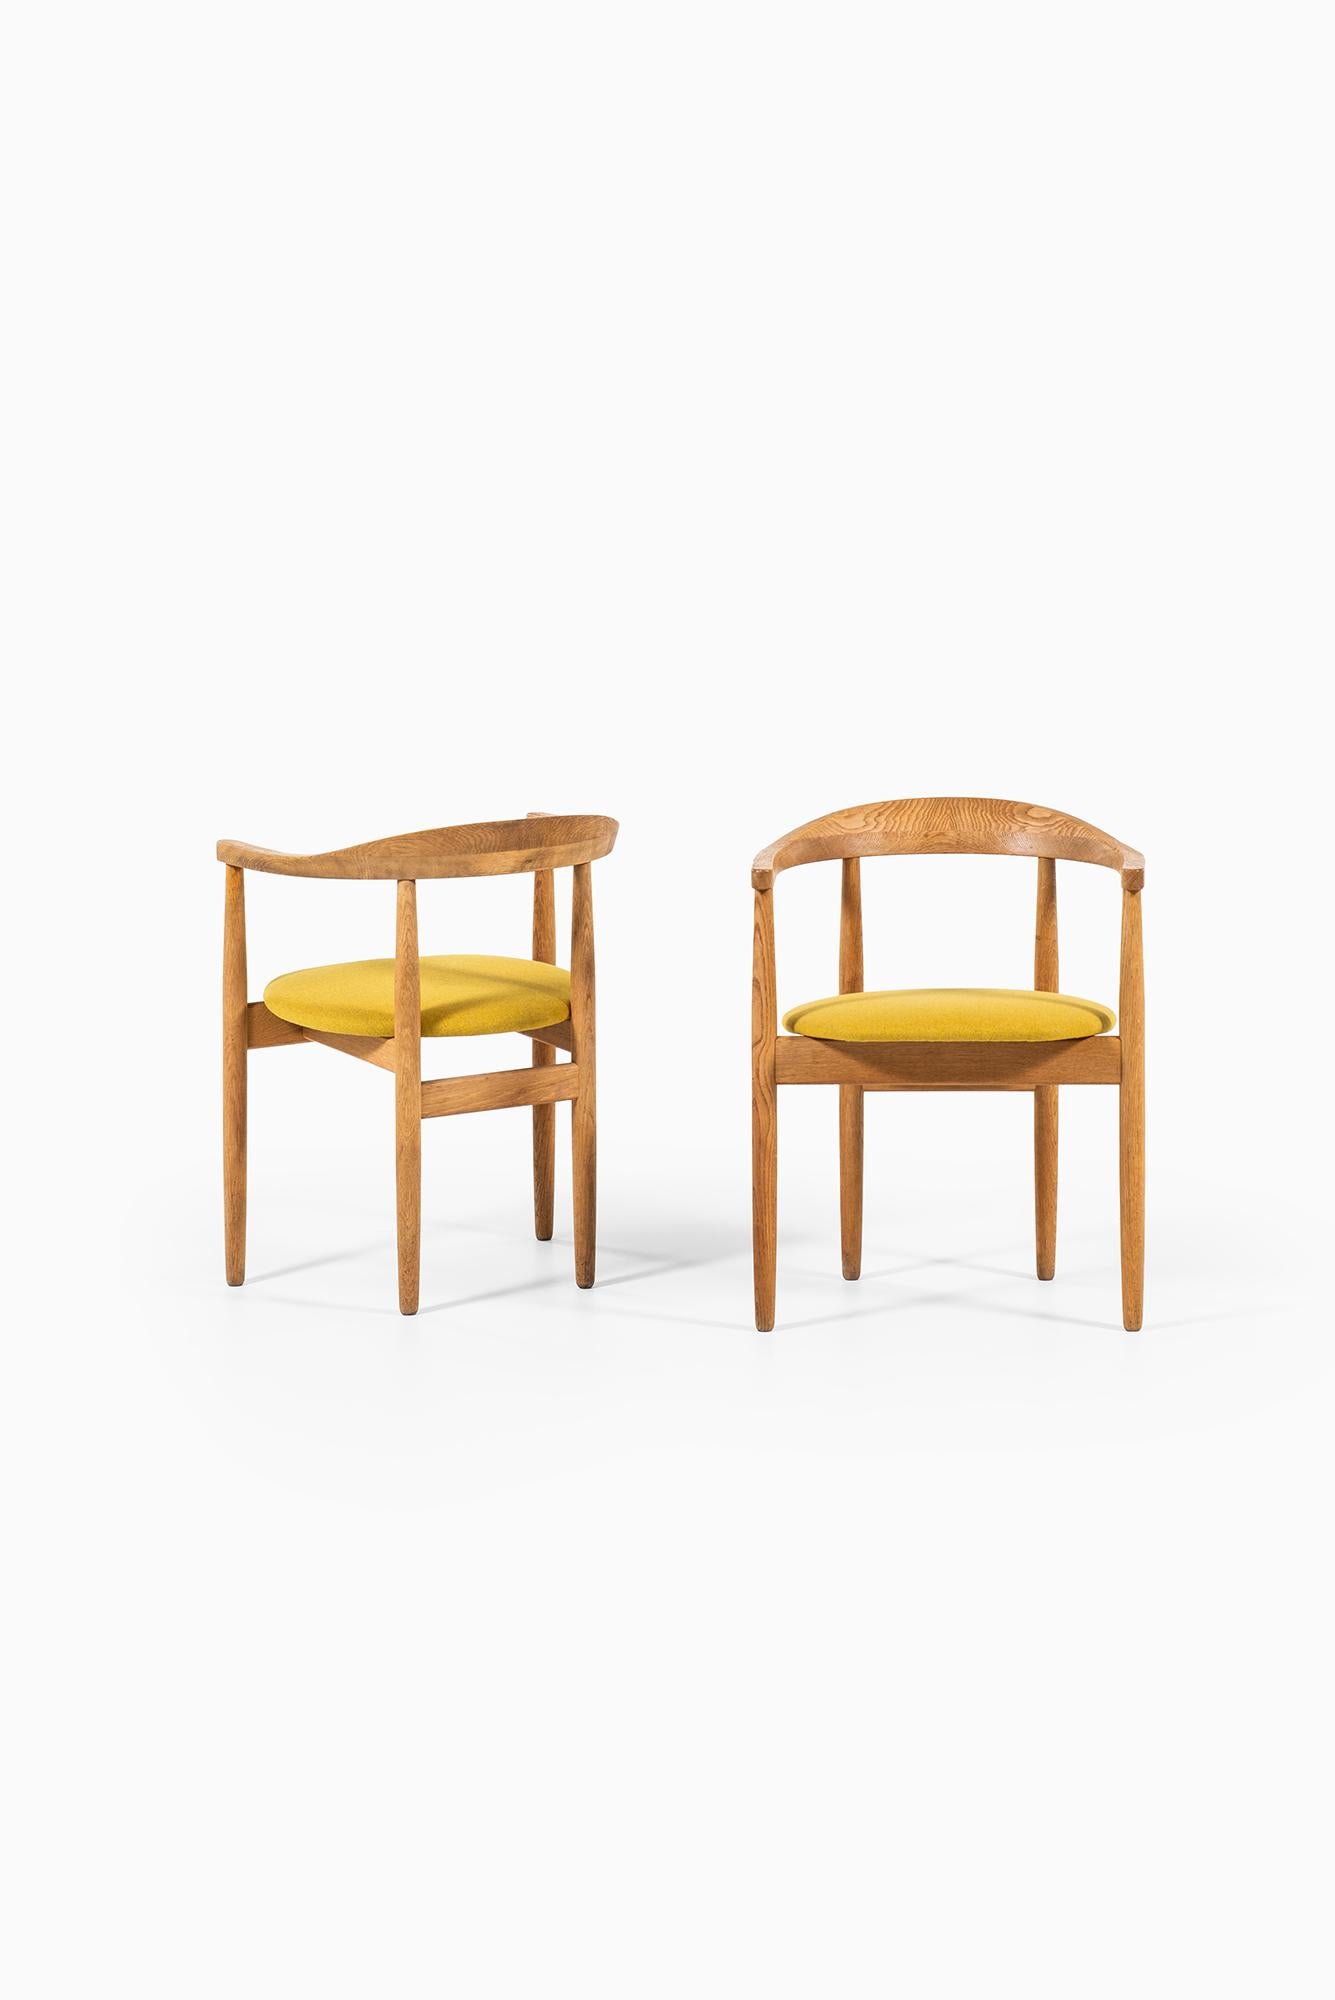 Rare armchairs designed by Bondo Gravesen. Produced by Bondo Gravesen in Denmark.